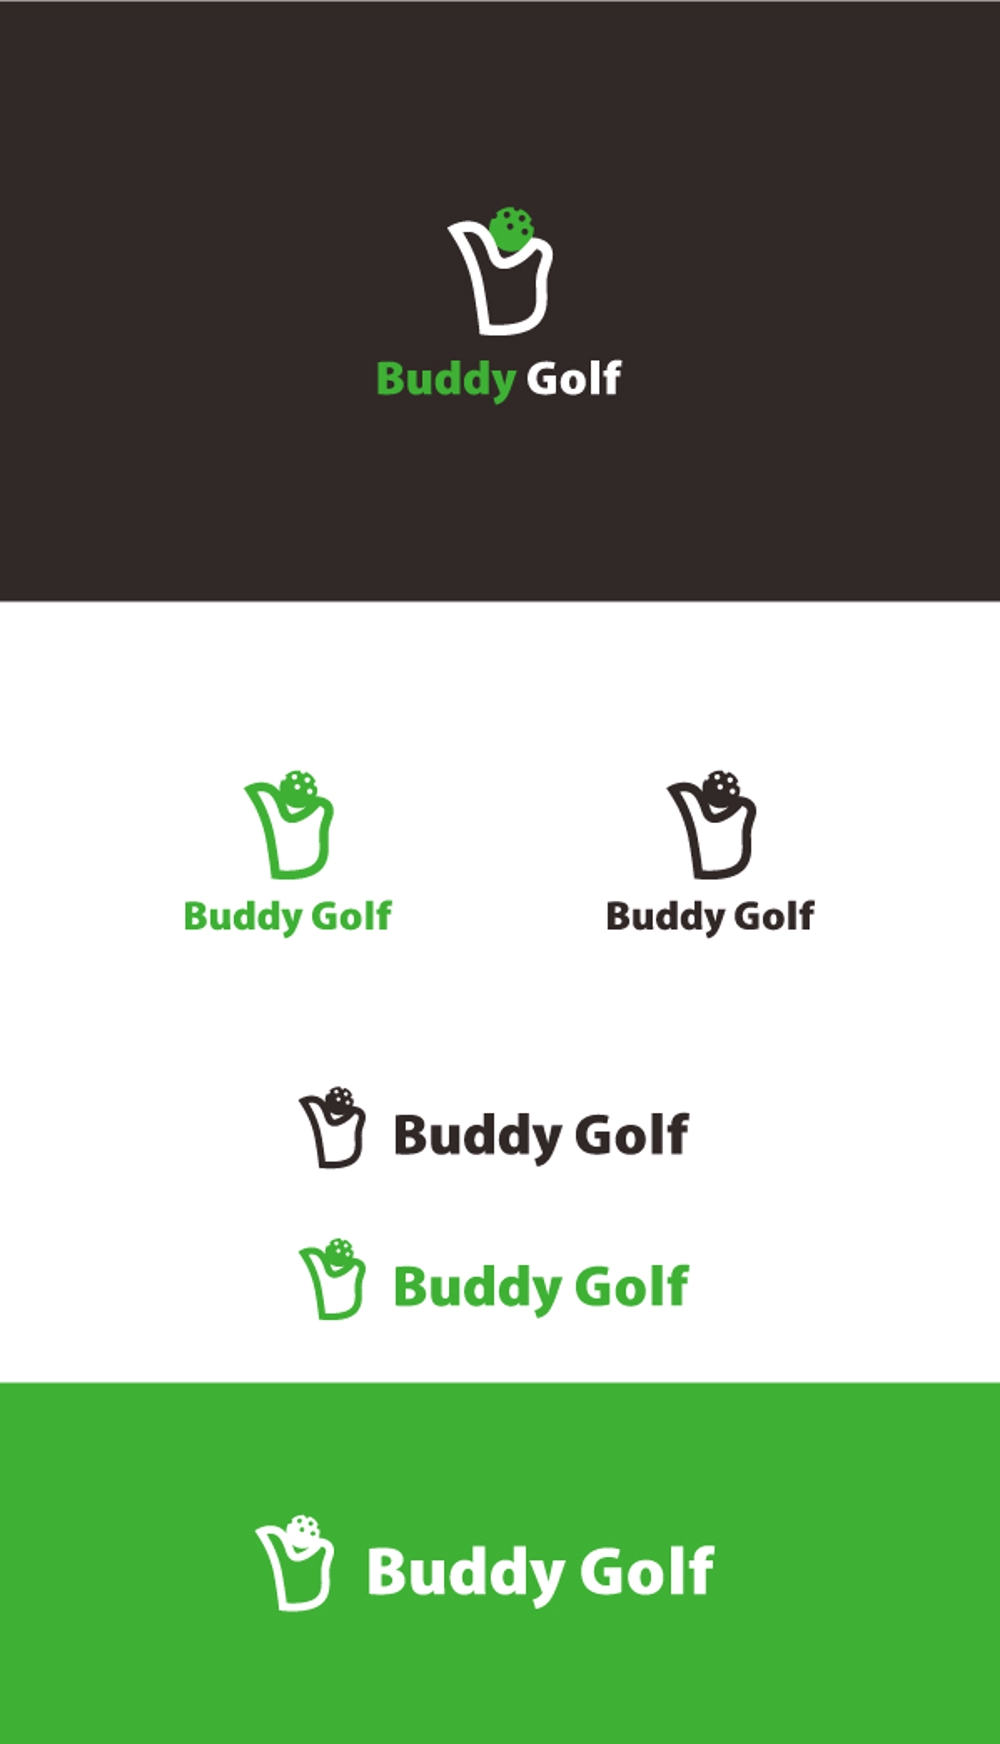 smk-buddy-golf-004.jpg